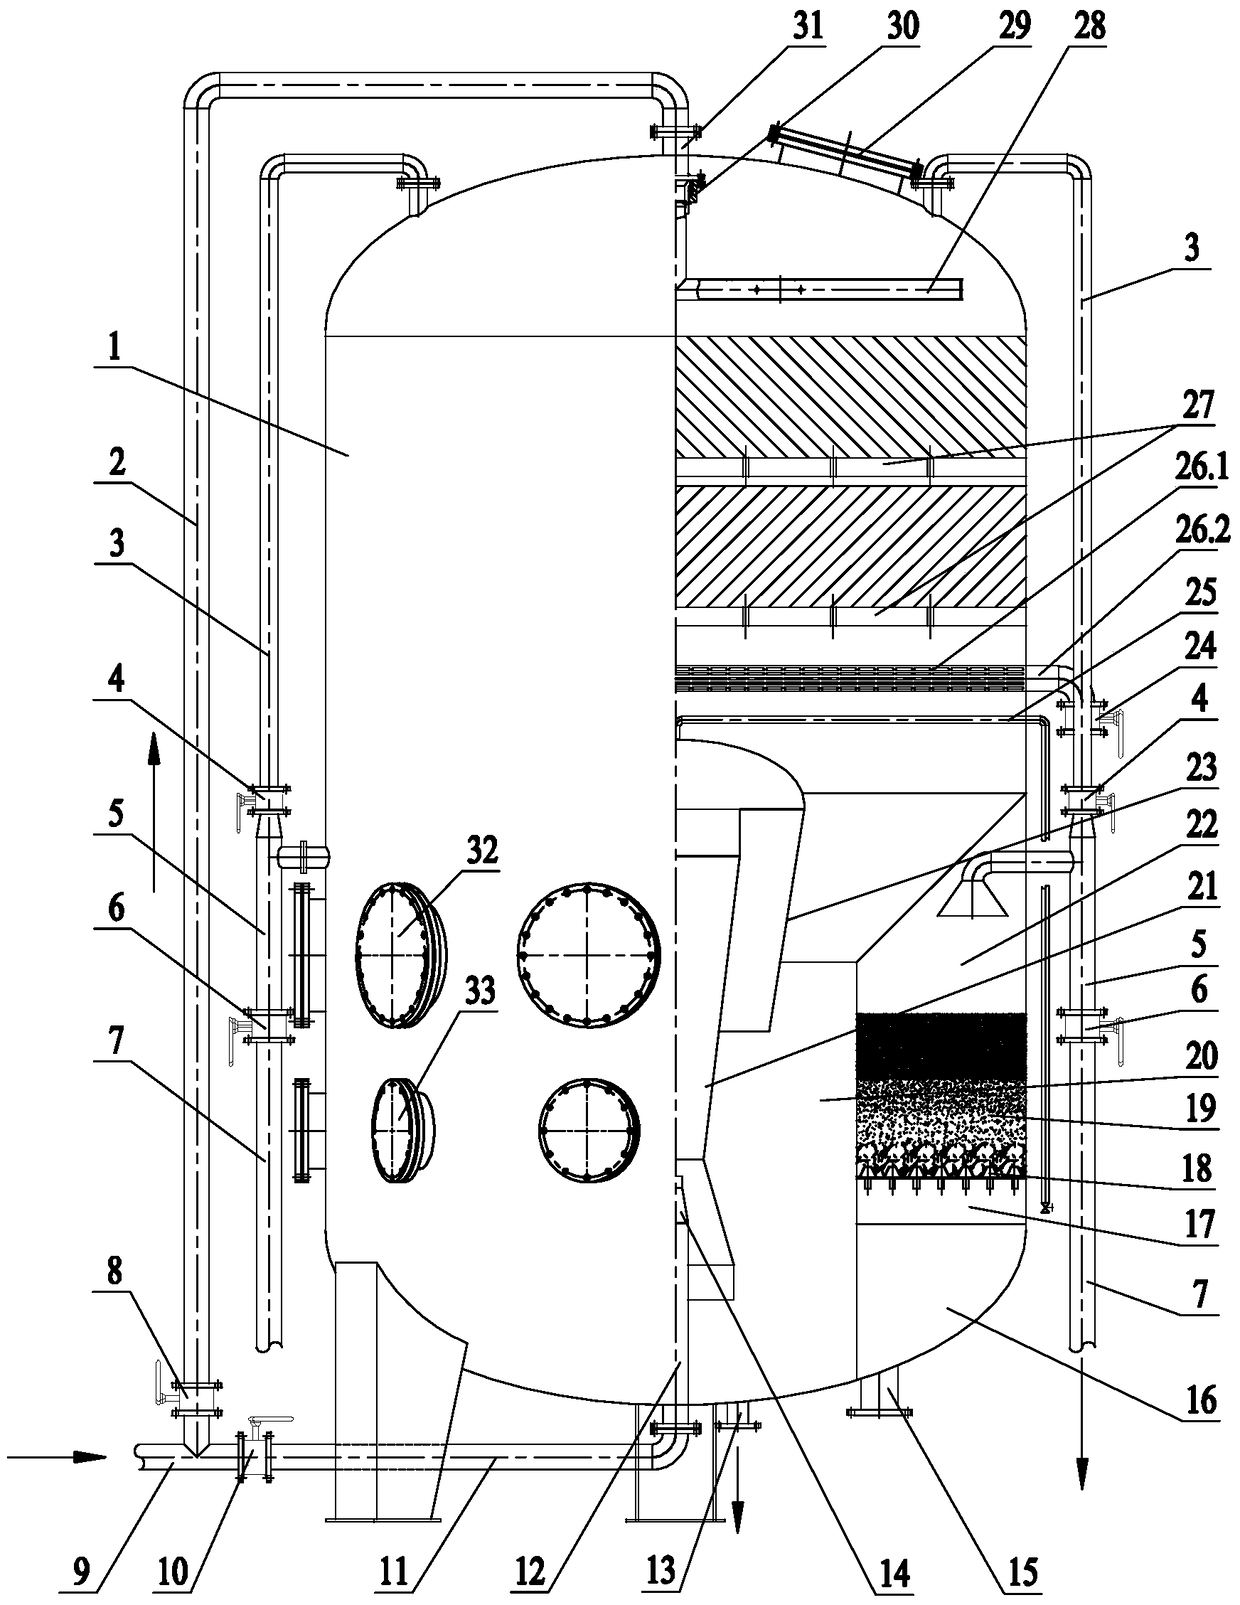 Constant pressure jet water purifier